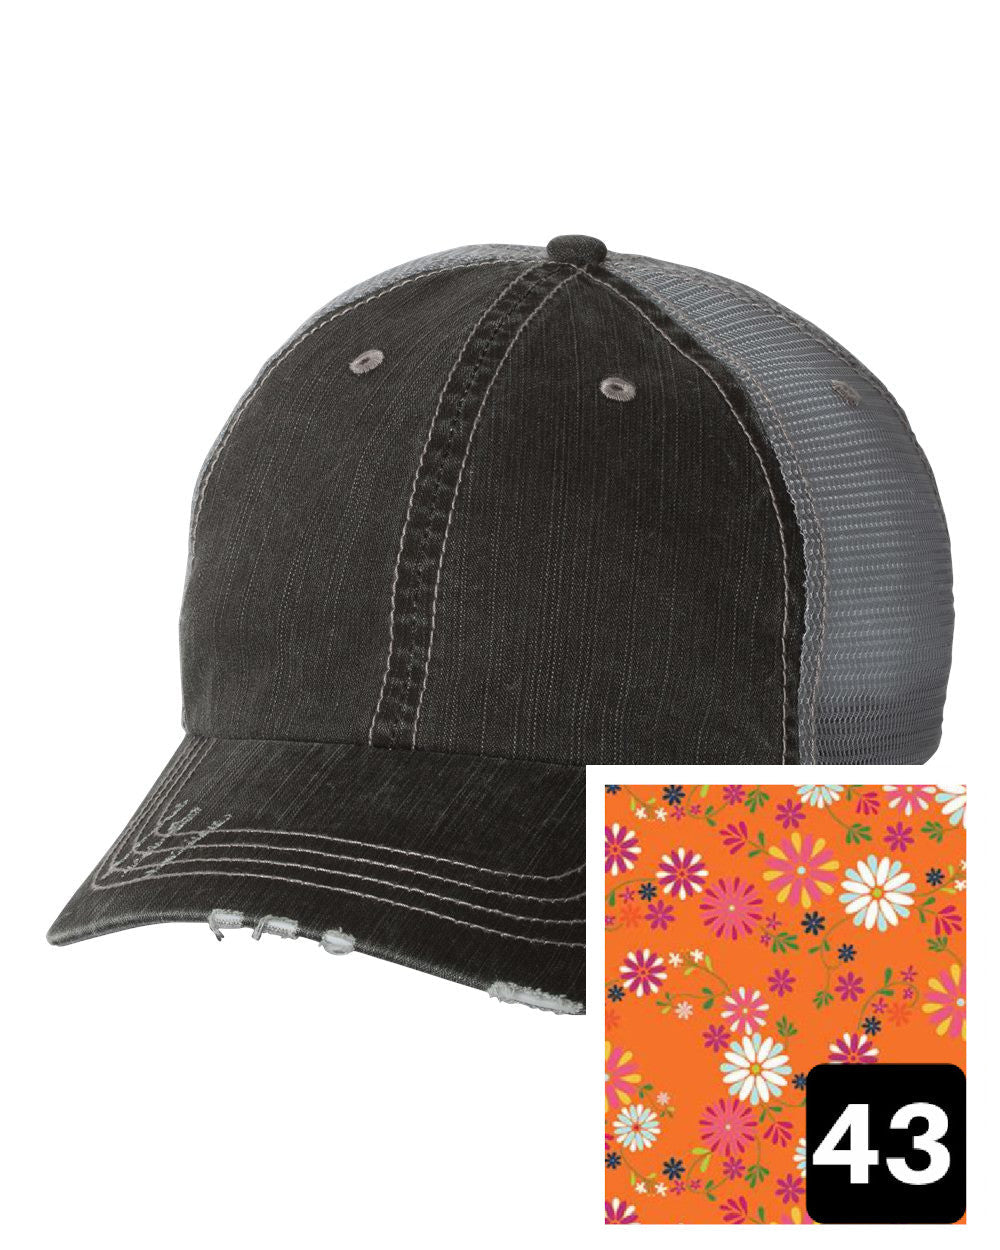 gray distressed trucker hat with black geometric fabric state of Alaska